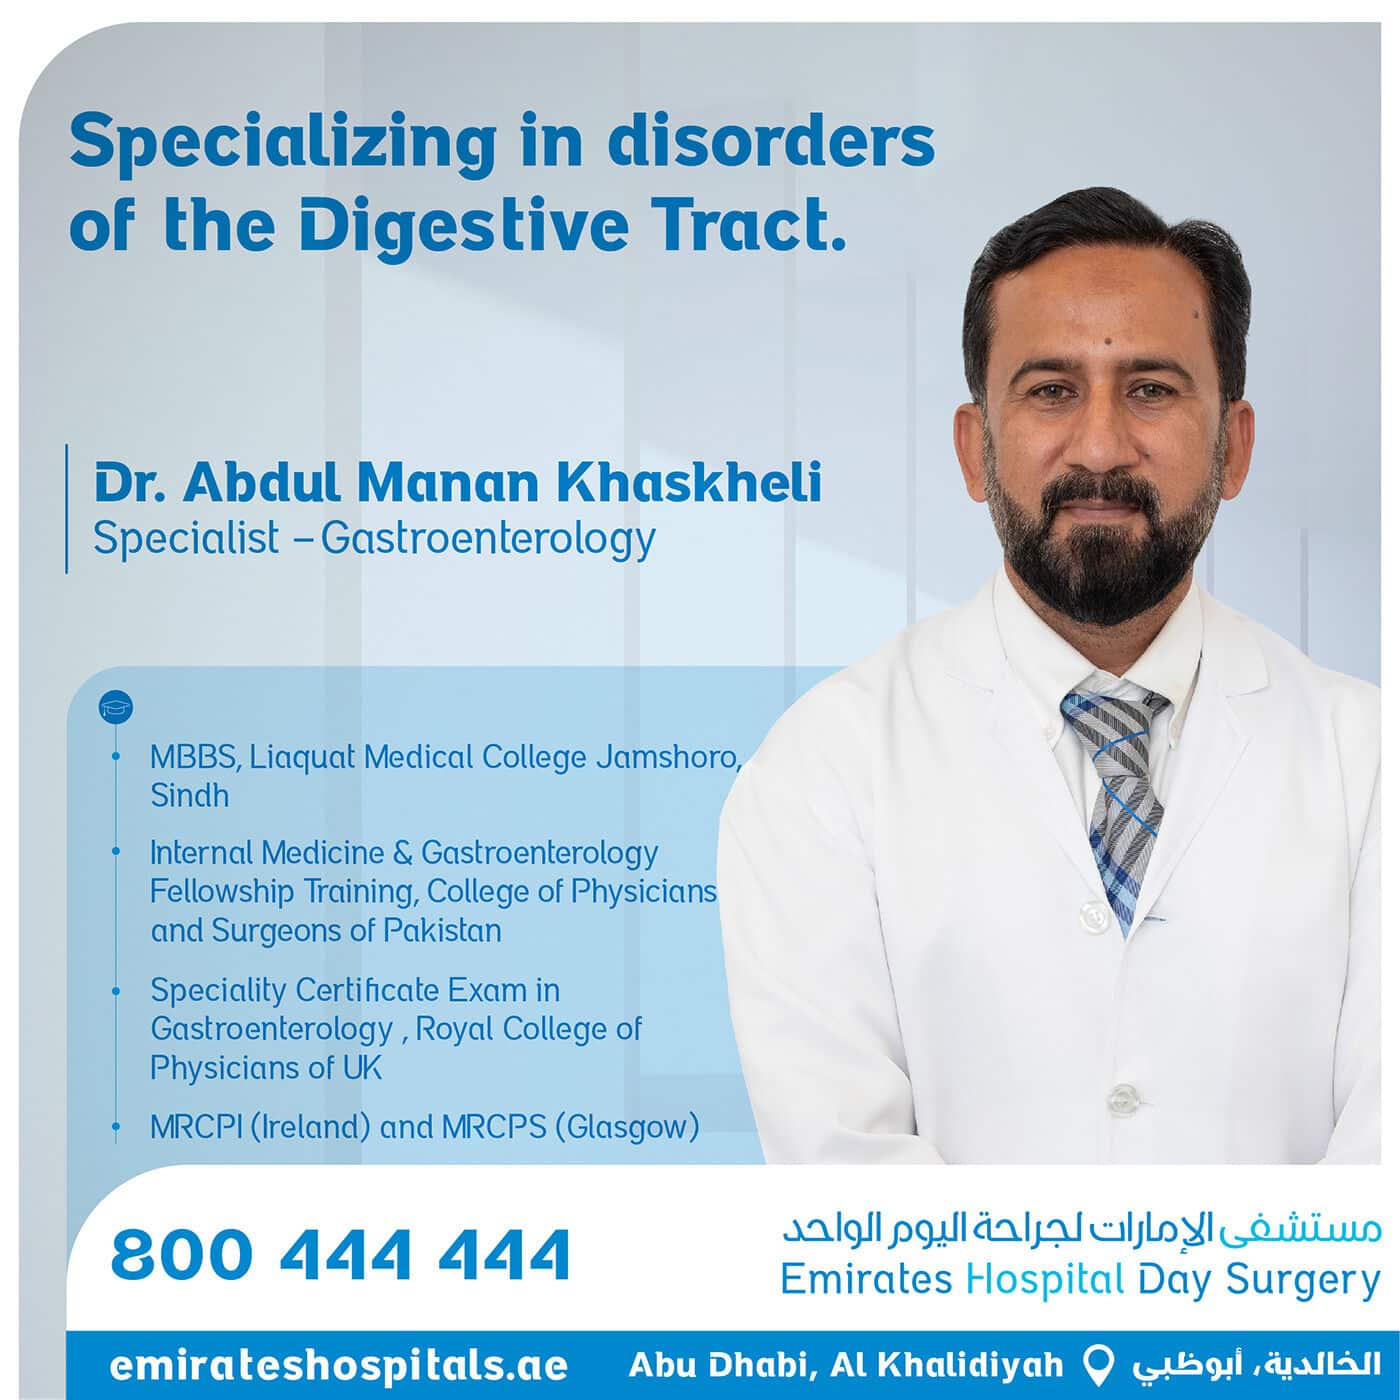 Dr. Abdul Manan Khaskheli, Specialist – Gastroenterology Joined Emirates Hospital Day Surgery